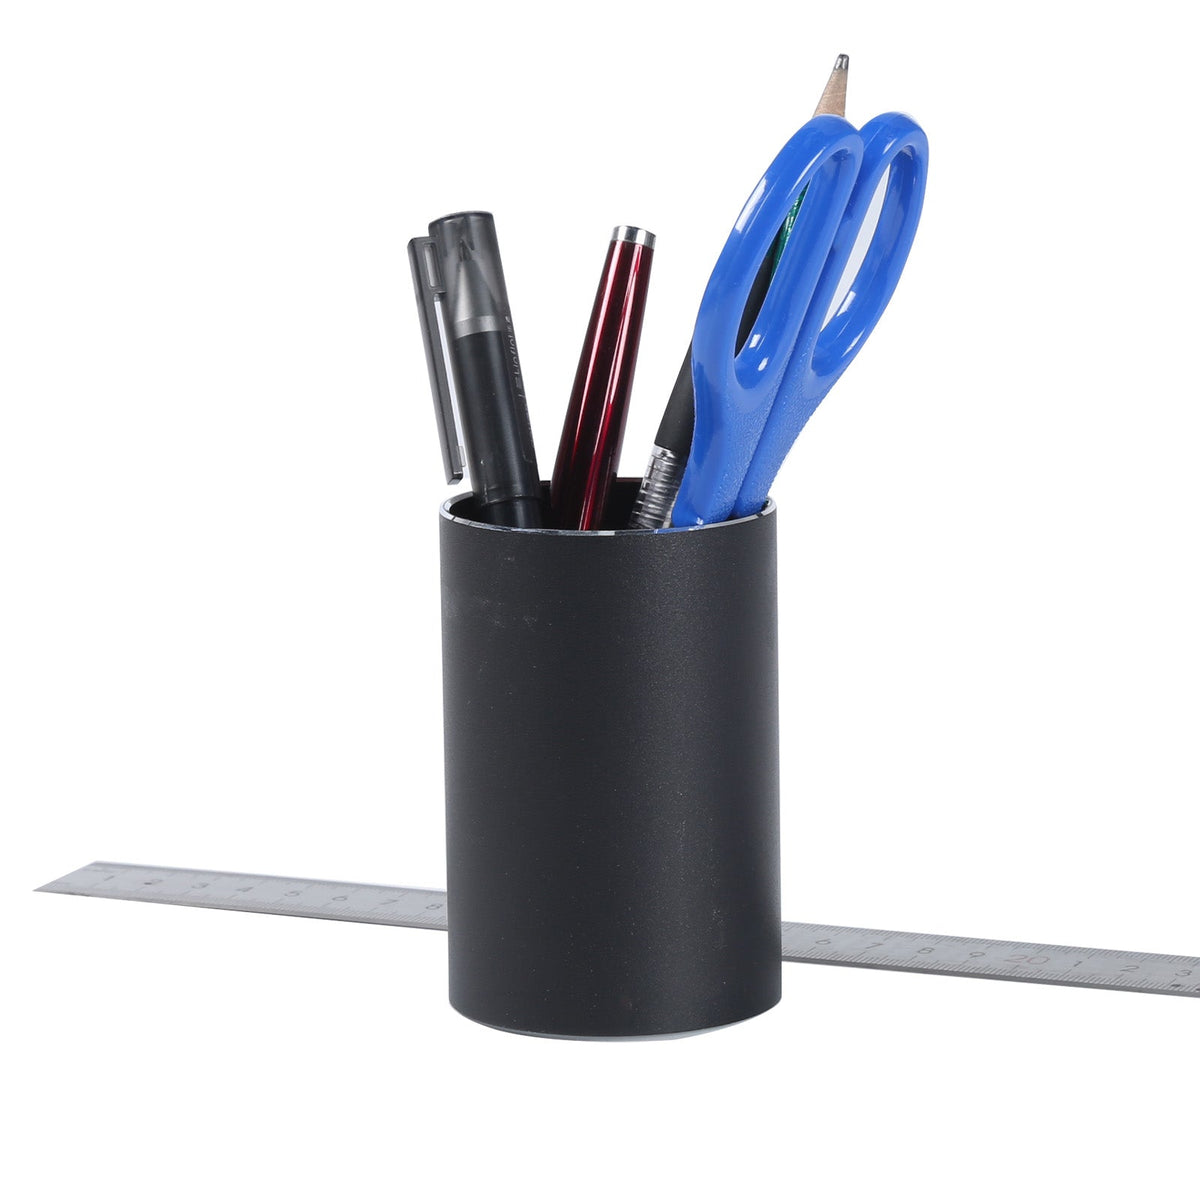 Aluminum Alloy Round Pen Holder Desktop Makeup Storage Organizer for Home Office School